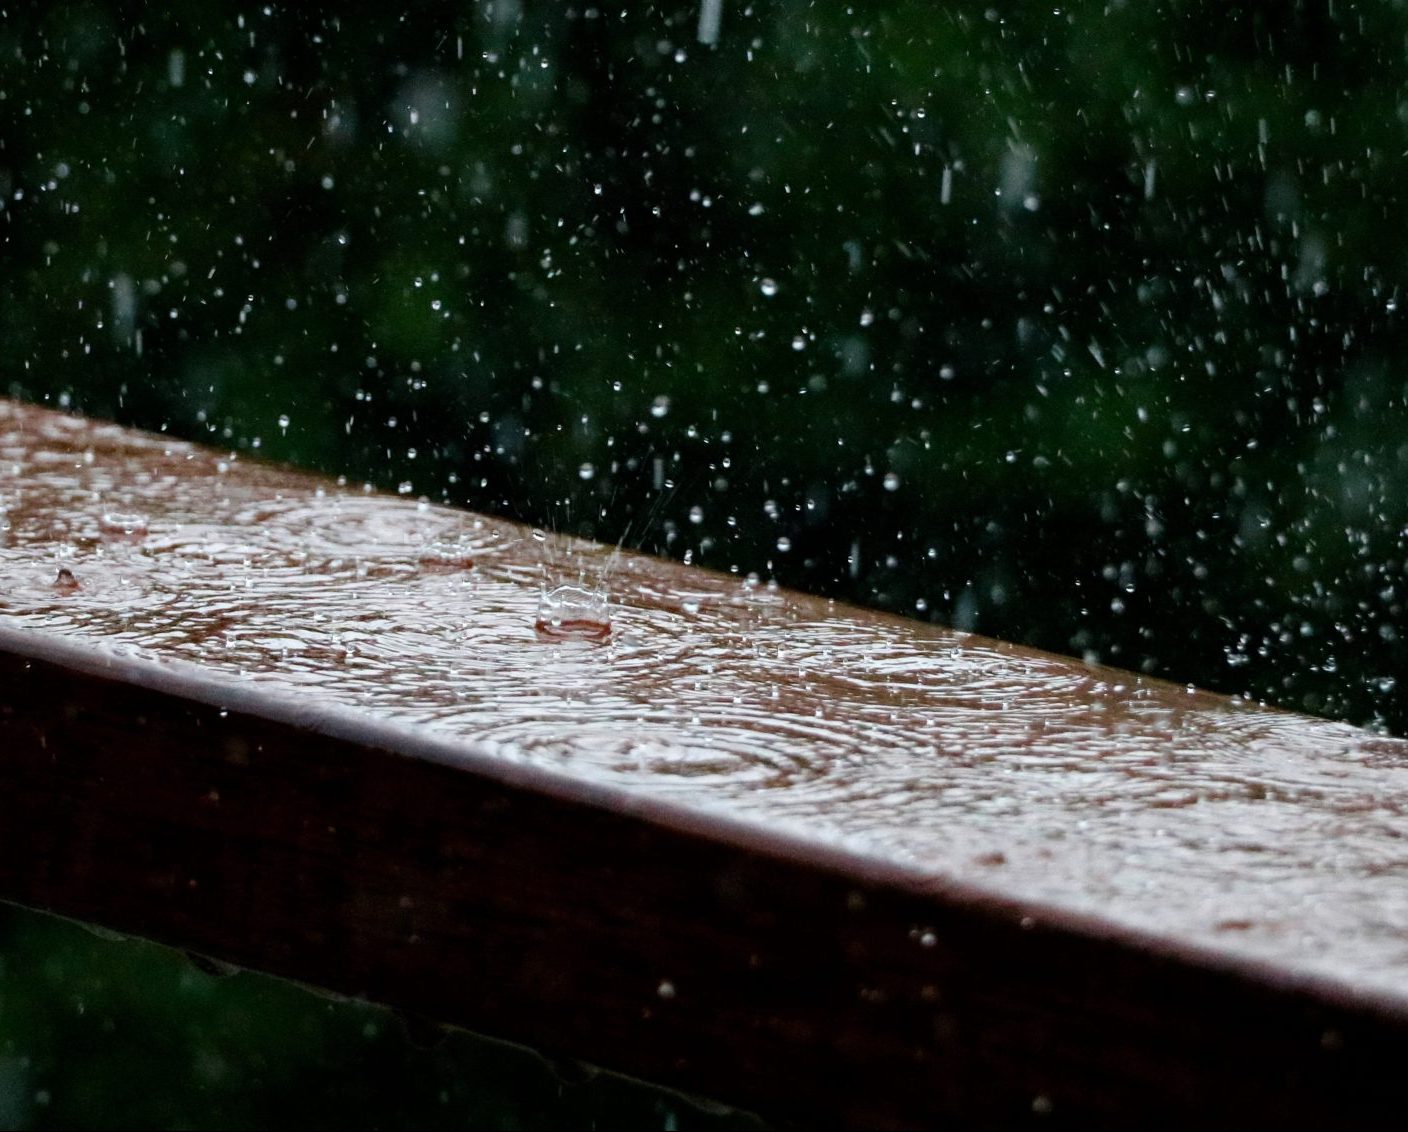 Rain drops fall upon a wooden surface